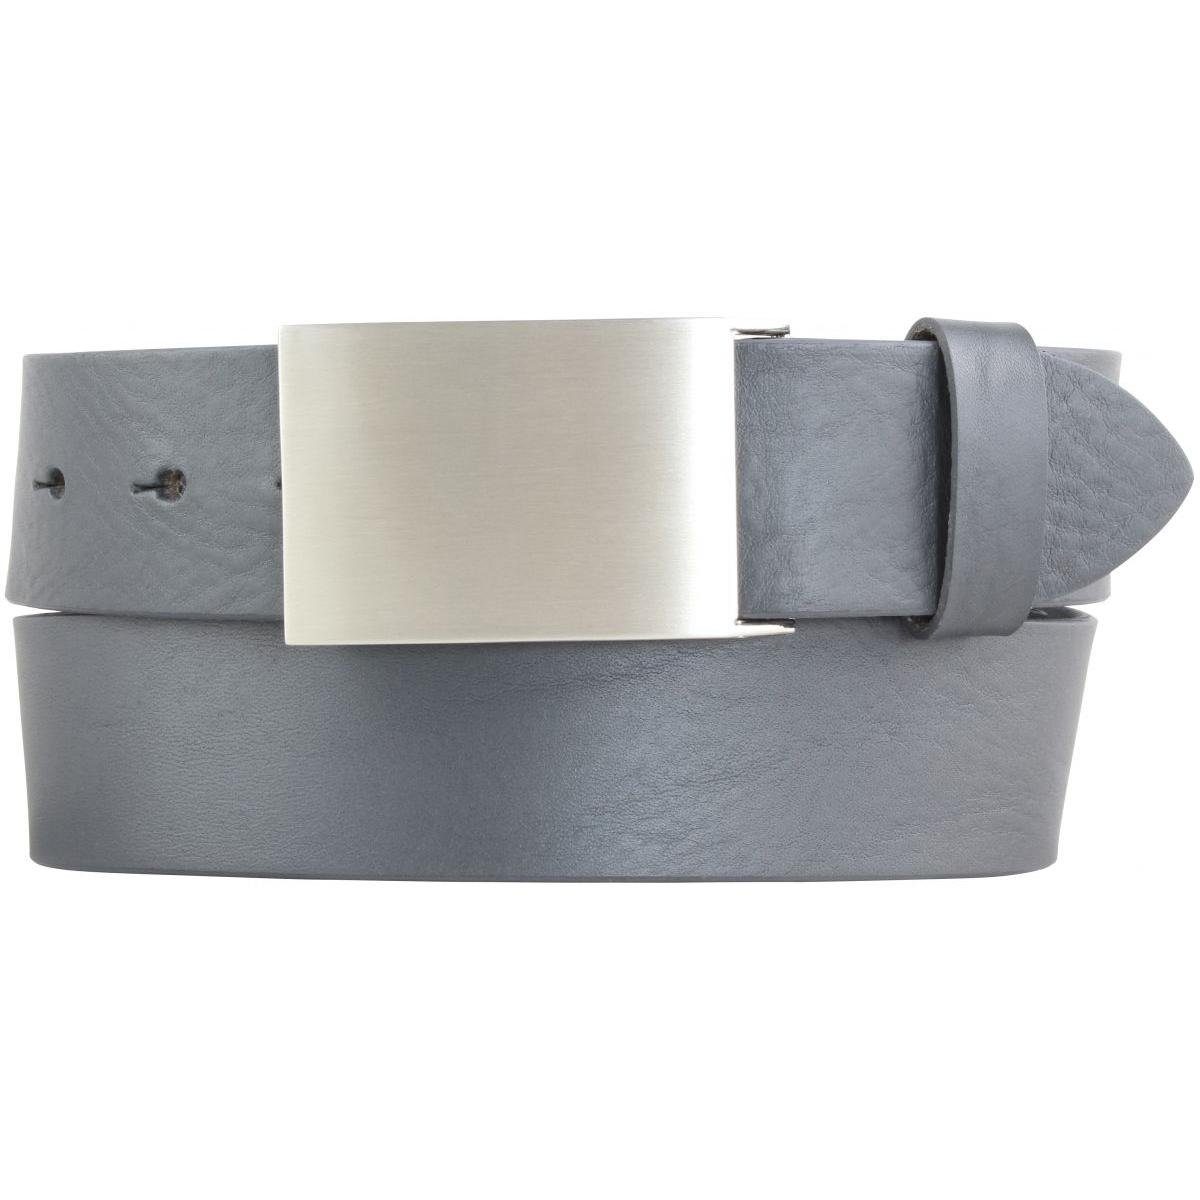 BELTINGER Ledergürtel Gürtel aus Vollrindleder 4,0 cm - Jeans-Gürtel für Herren 40mm - Jeans Dunkelgrau, Silber | Gürtel